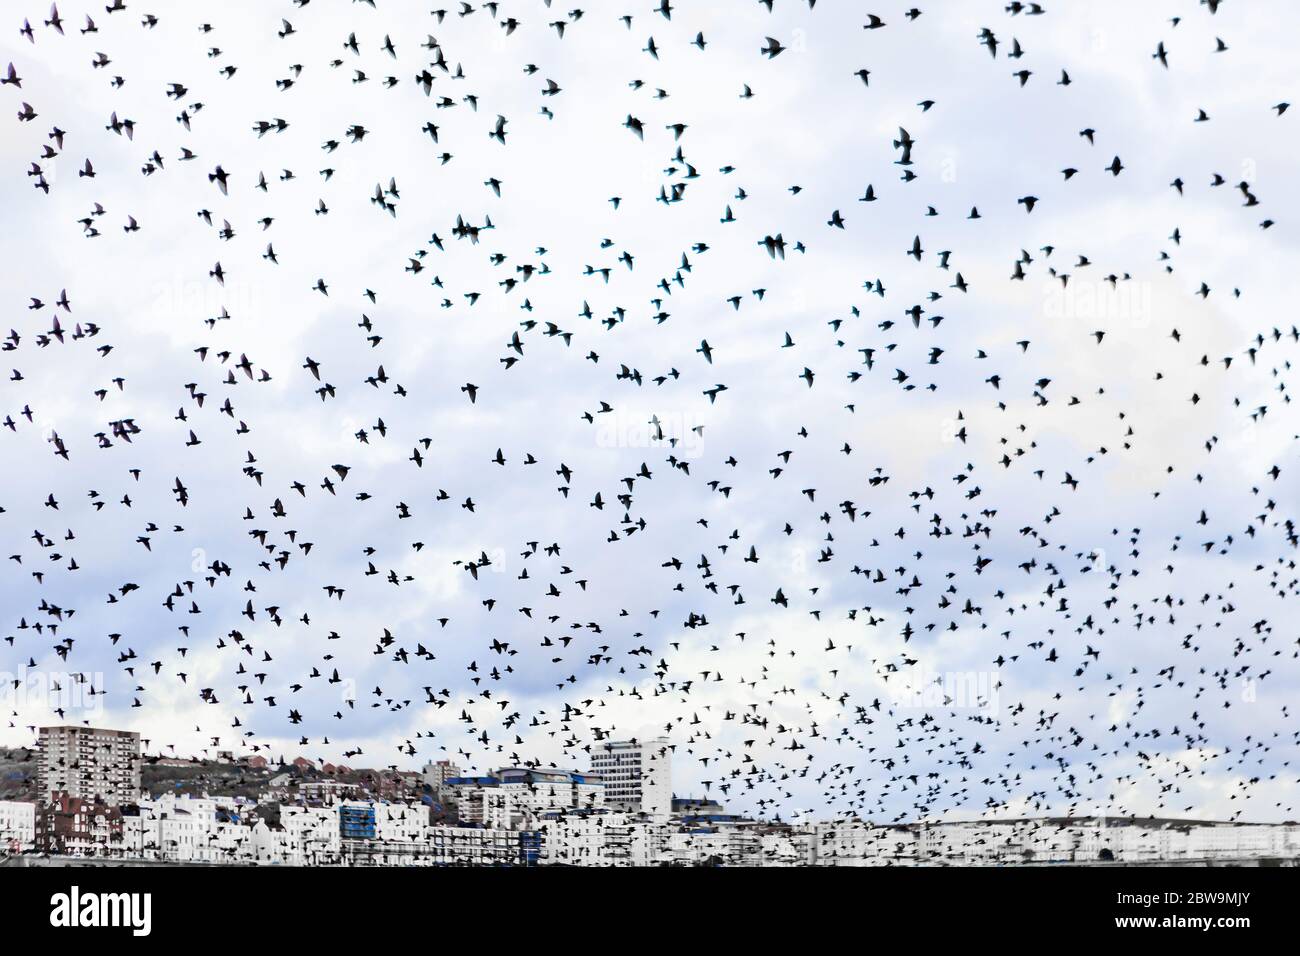 Flock of seagulls at seaside Stock Photo